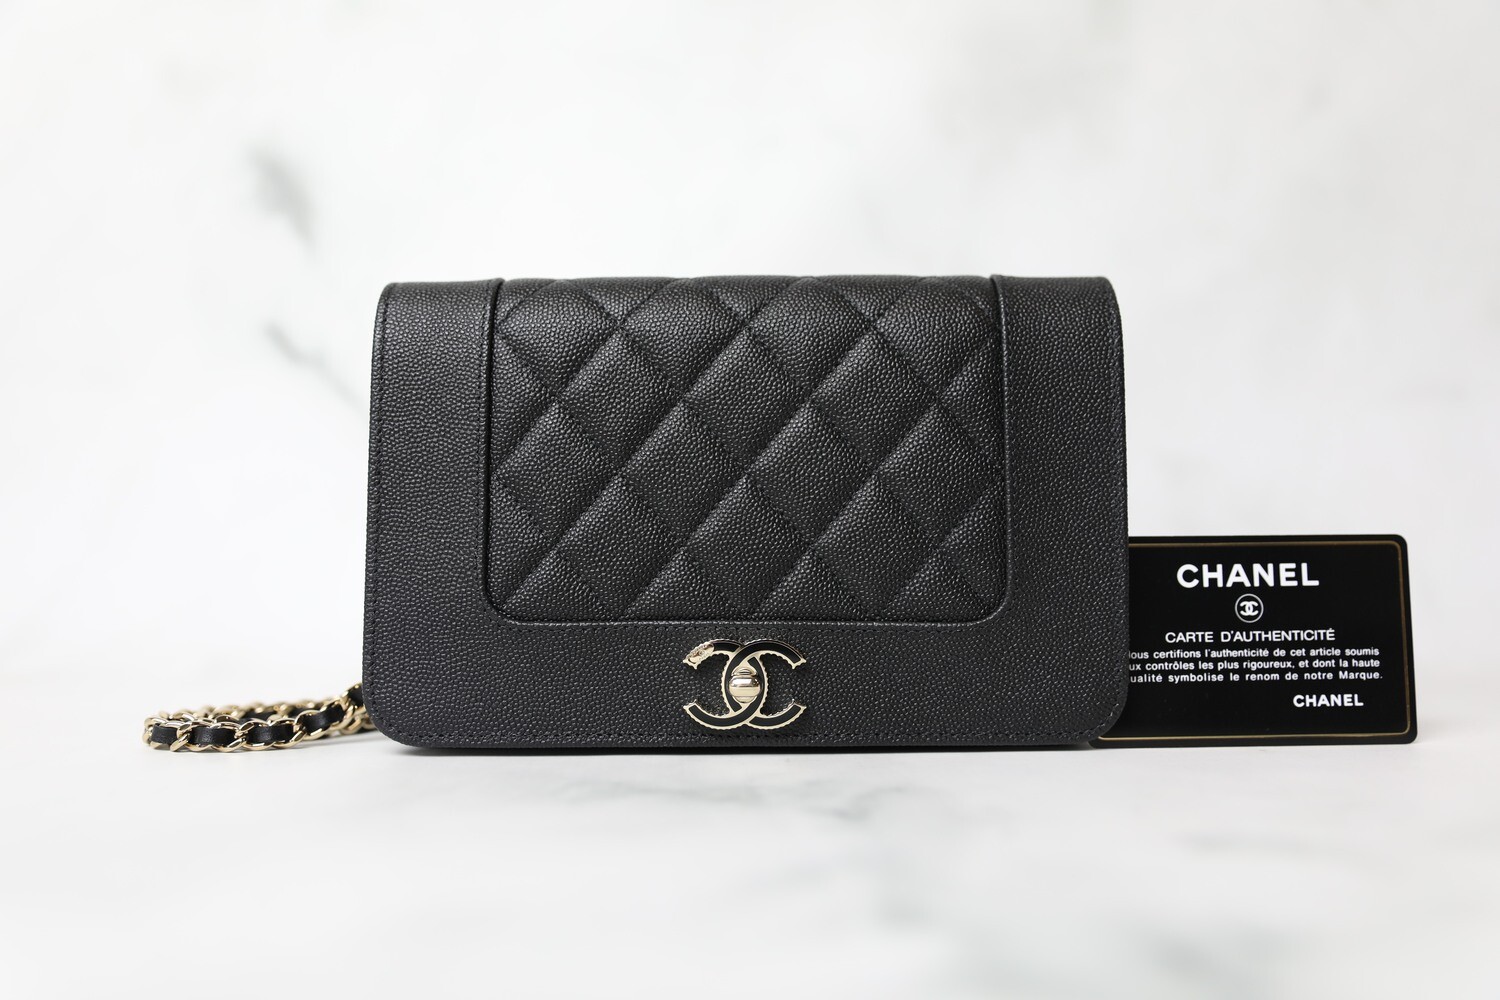 Chanel Mini WOC Black Bag 15.5x3.5x11cm for Sale in Glendale, CA